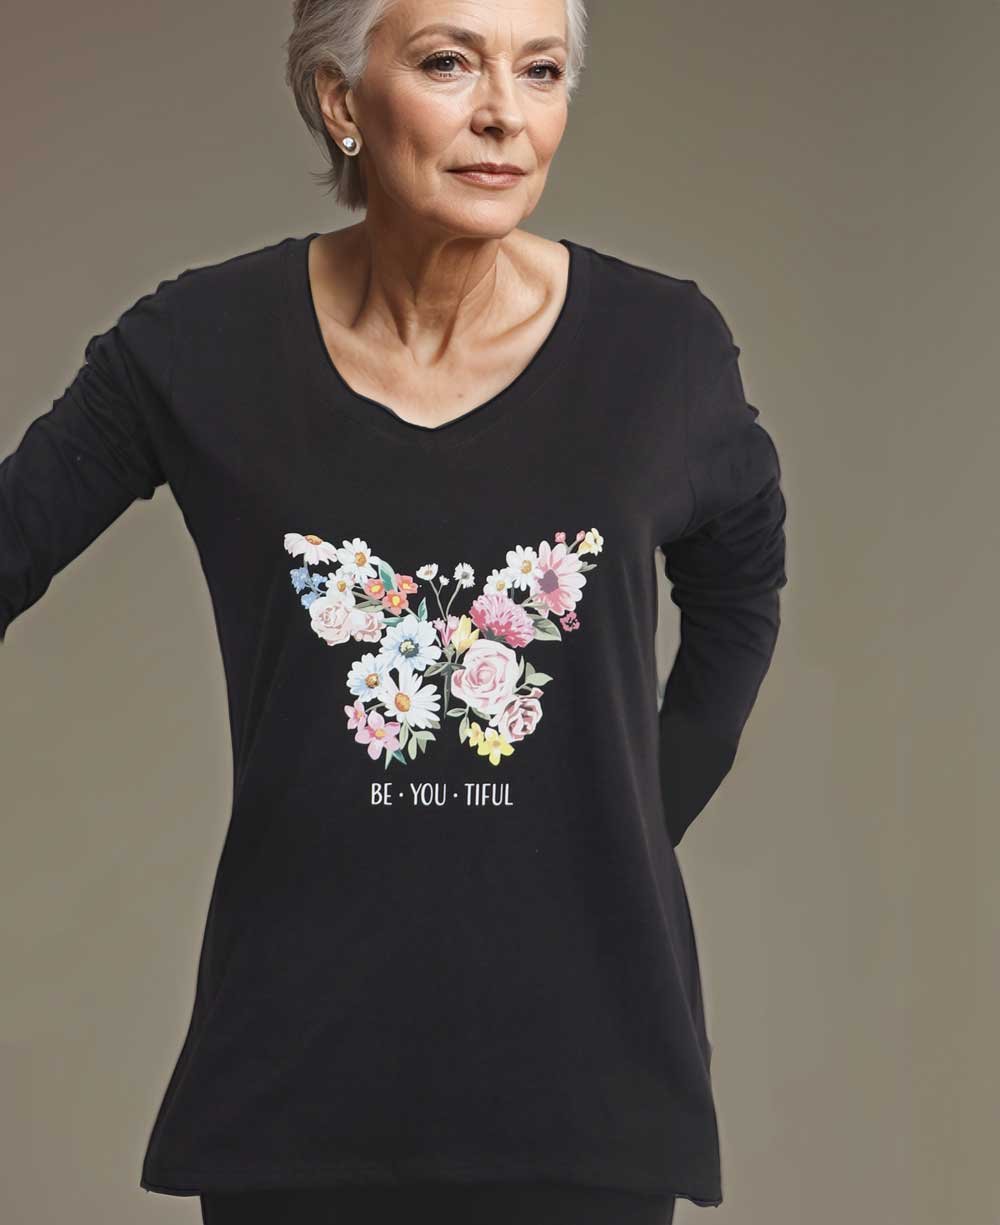 BeYouTiful Women's T-Shirt with Butterfly Design - Shirts & Tops S